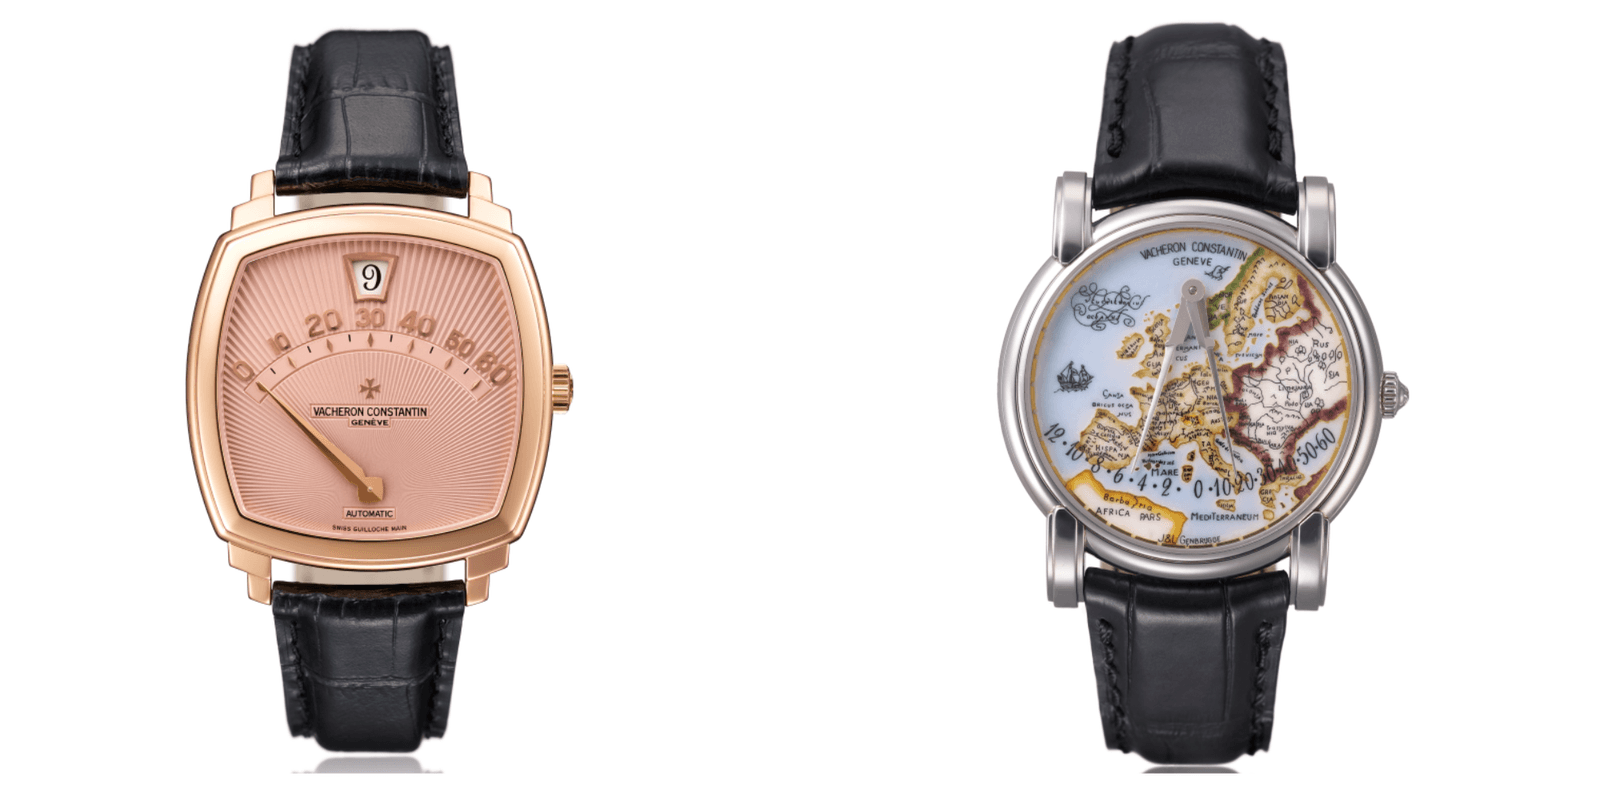 Saltarello pink gold watch, jumping hour display and retrograde minutes - 2000 and the Mercator platinum wristwatch, bi-retrograde display - 2001